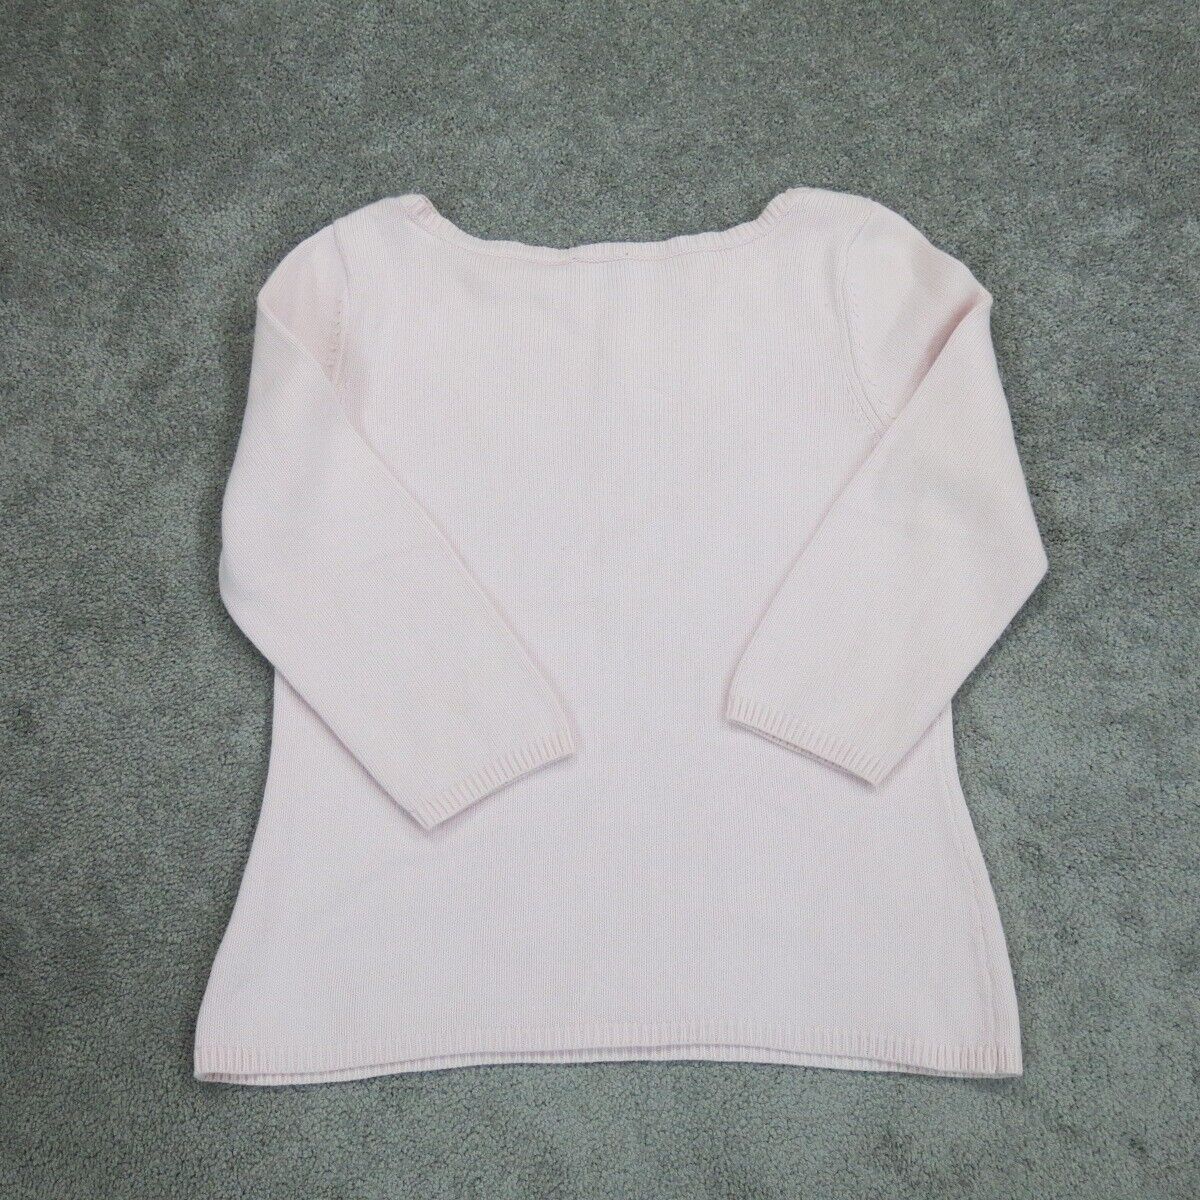 Talbots Womens Pullover Sweater Boat Neck 3/4 Sleeves Light Pink Petite Medium